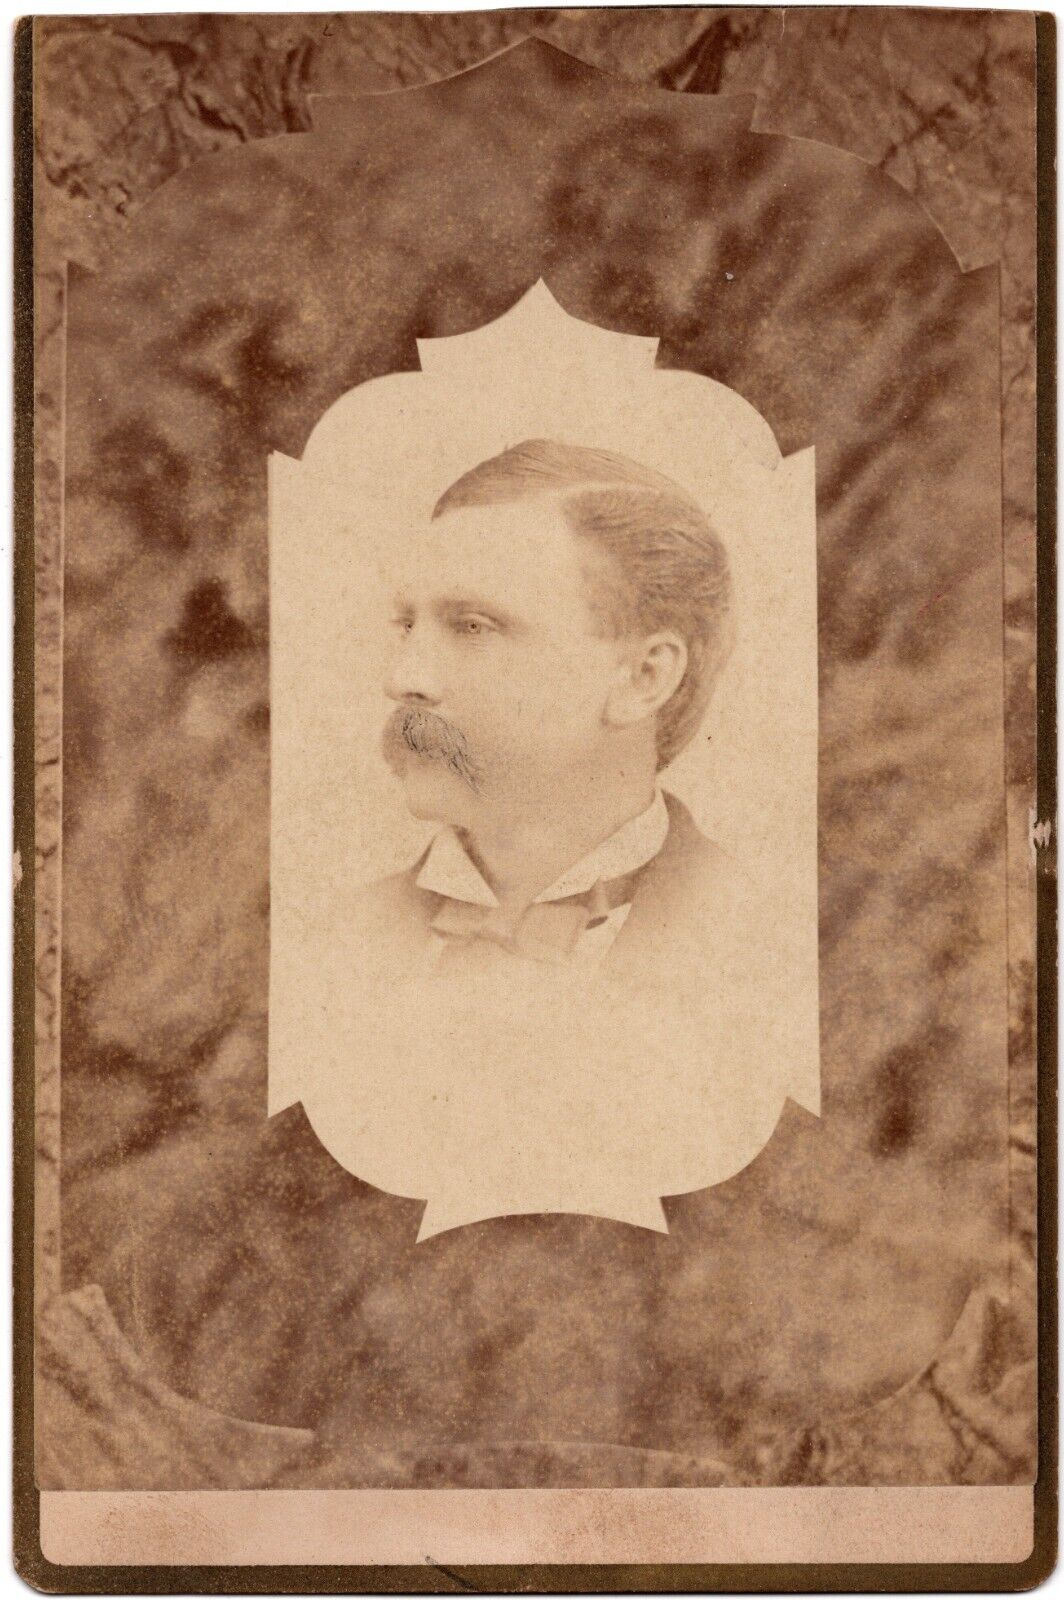 CIRCA 1880s CABINET CARD WYATT EARP? FAMED LAWMAN OLD WEST OAKLAND CALIFORNIA